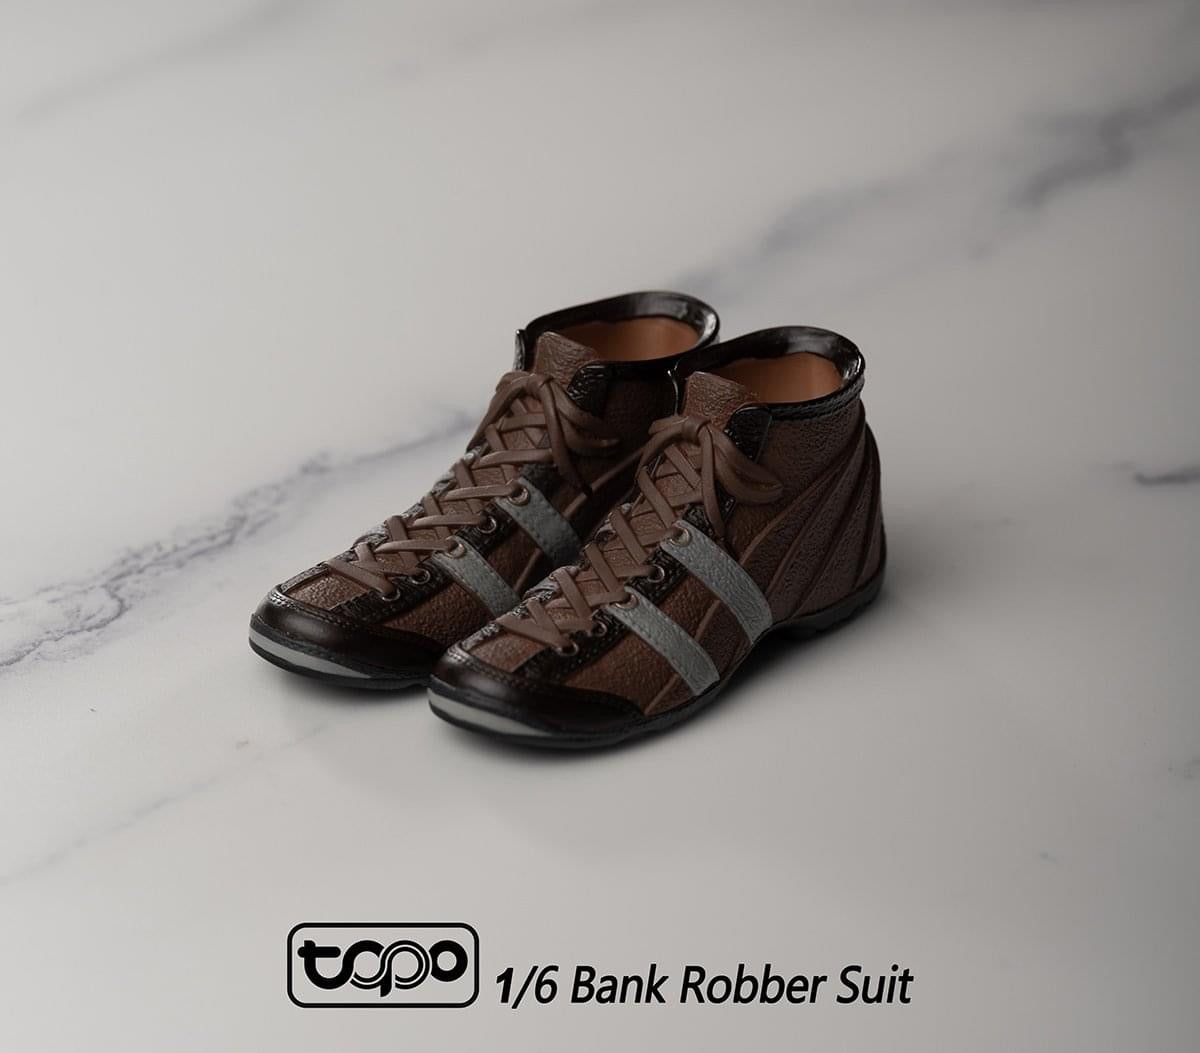 Pedido Set Bank Robber (ropa y cabeza) marca TOPO TP003 escala 1/6